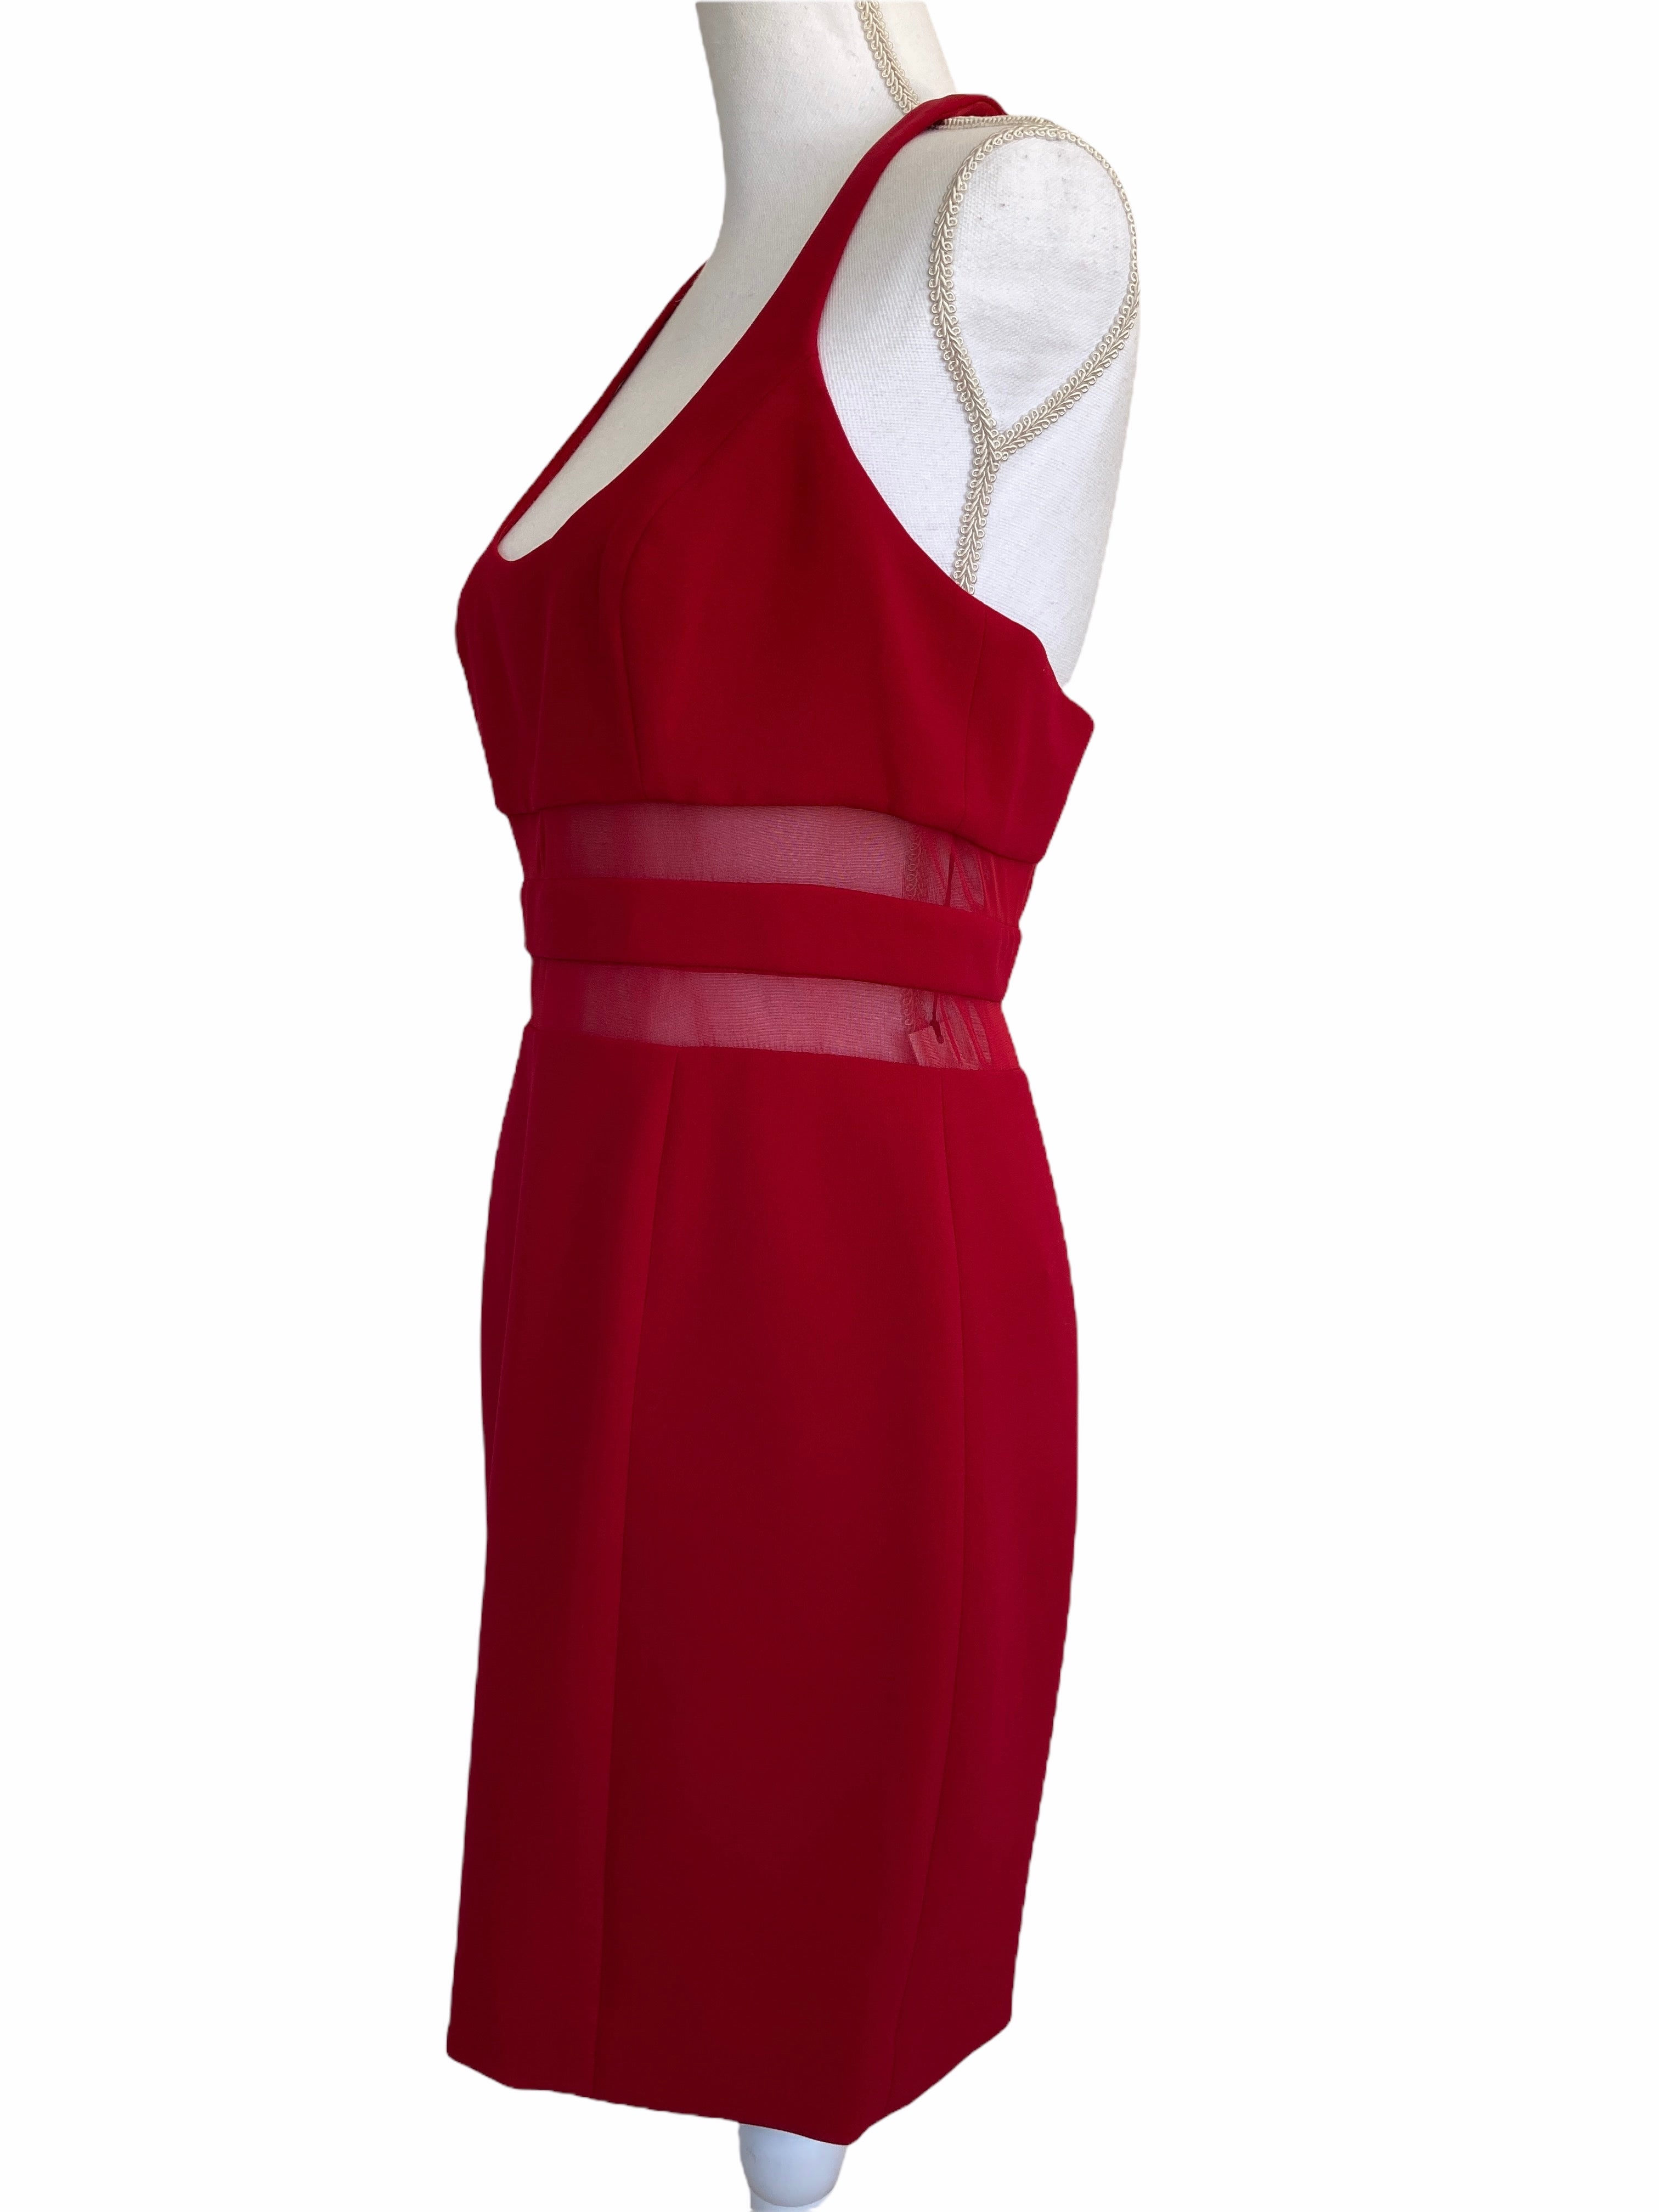 Jay Godfrey Red Cocktail Dress, 8